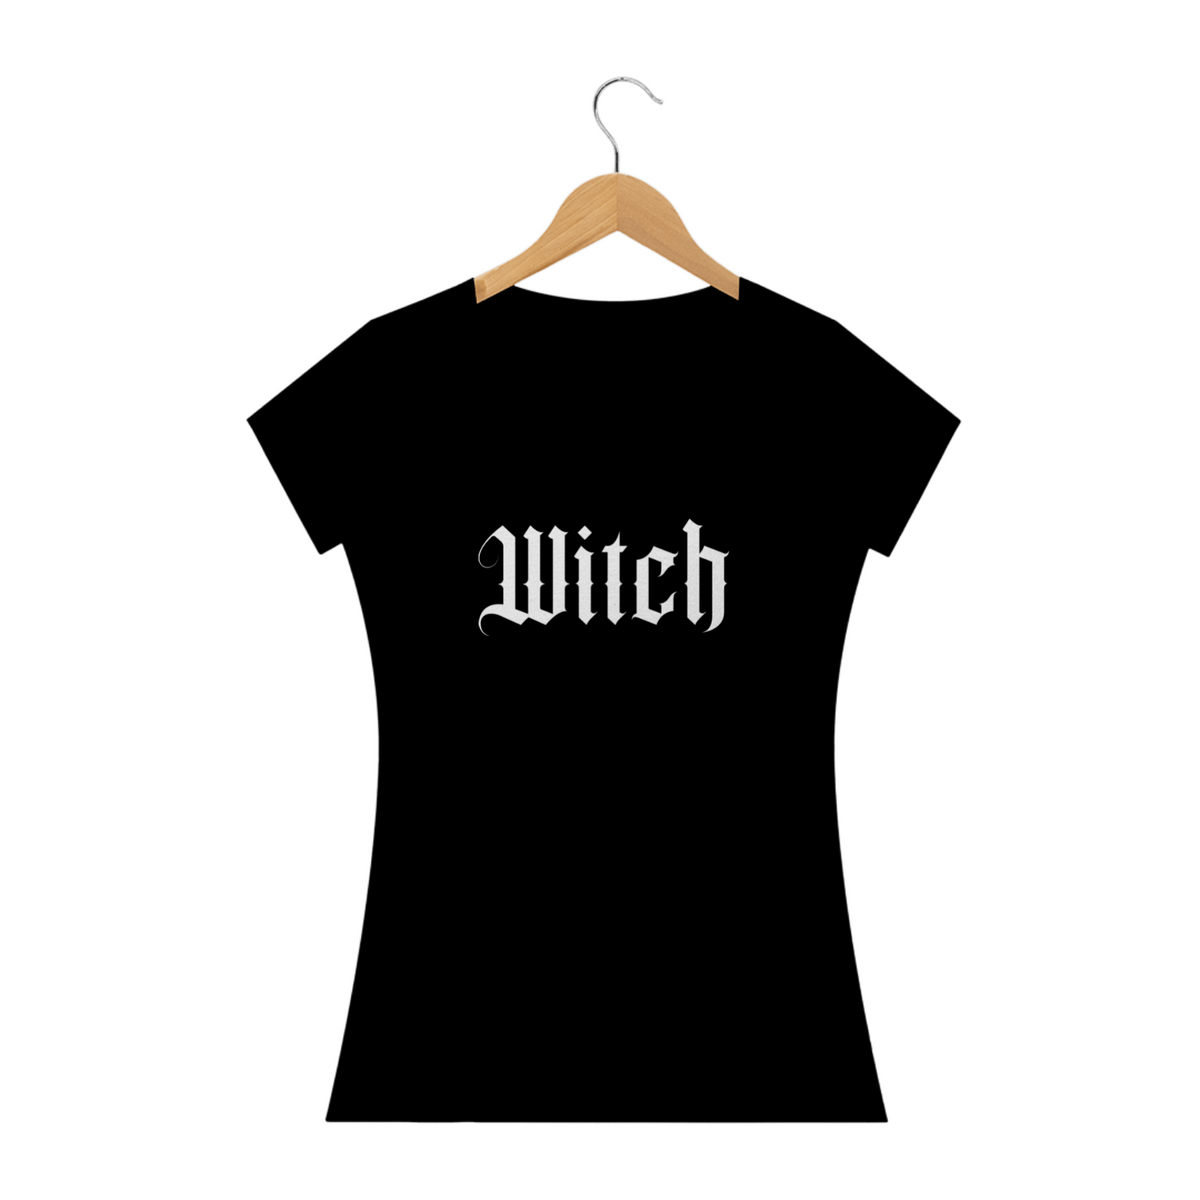 Nome do produto: Witch babylook preta